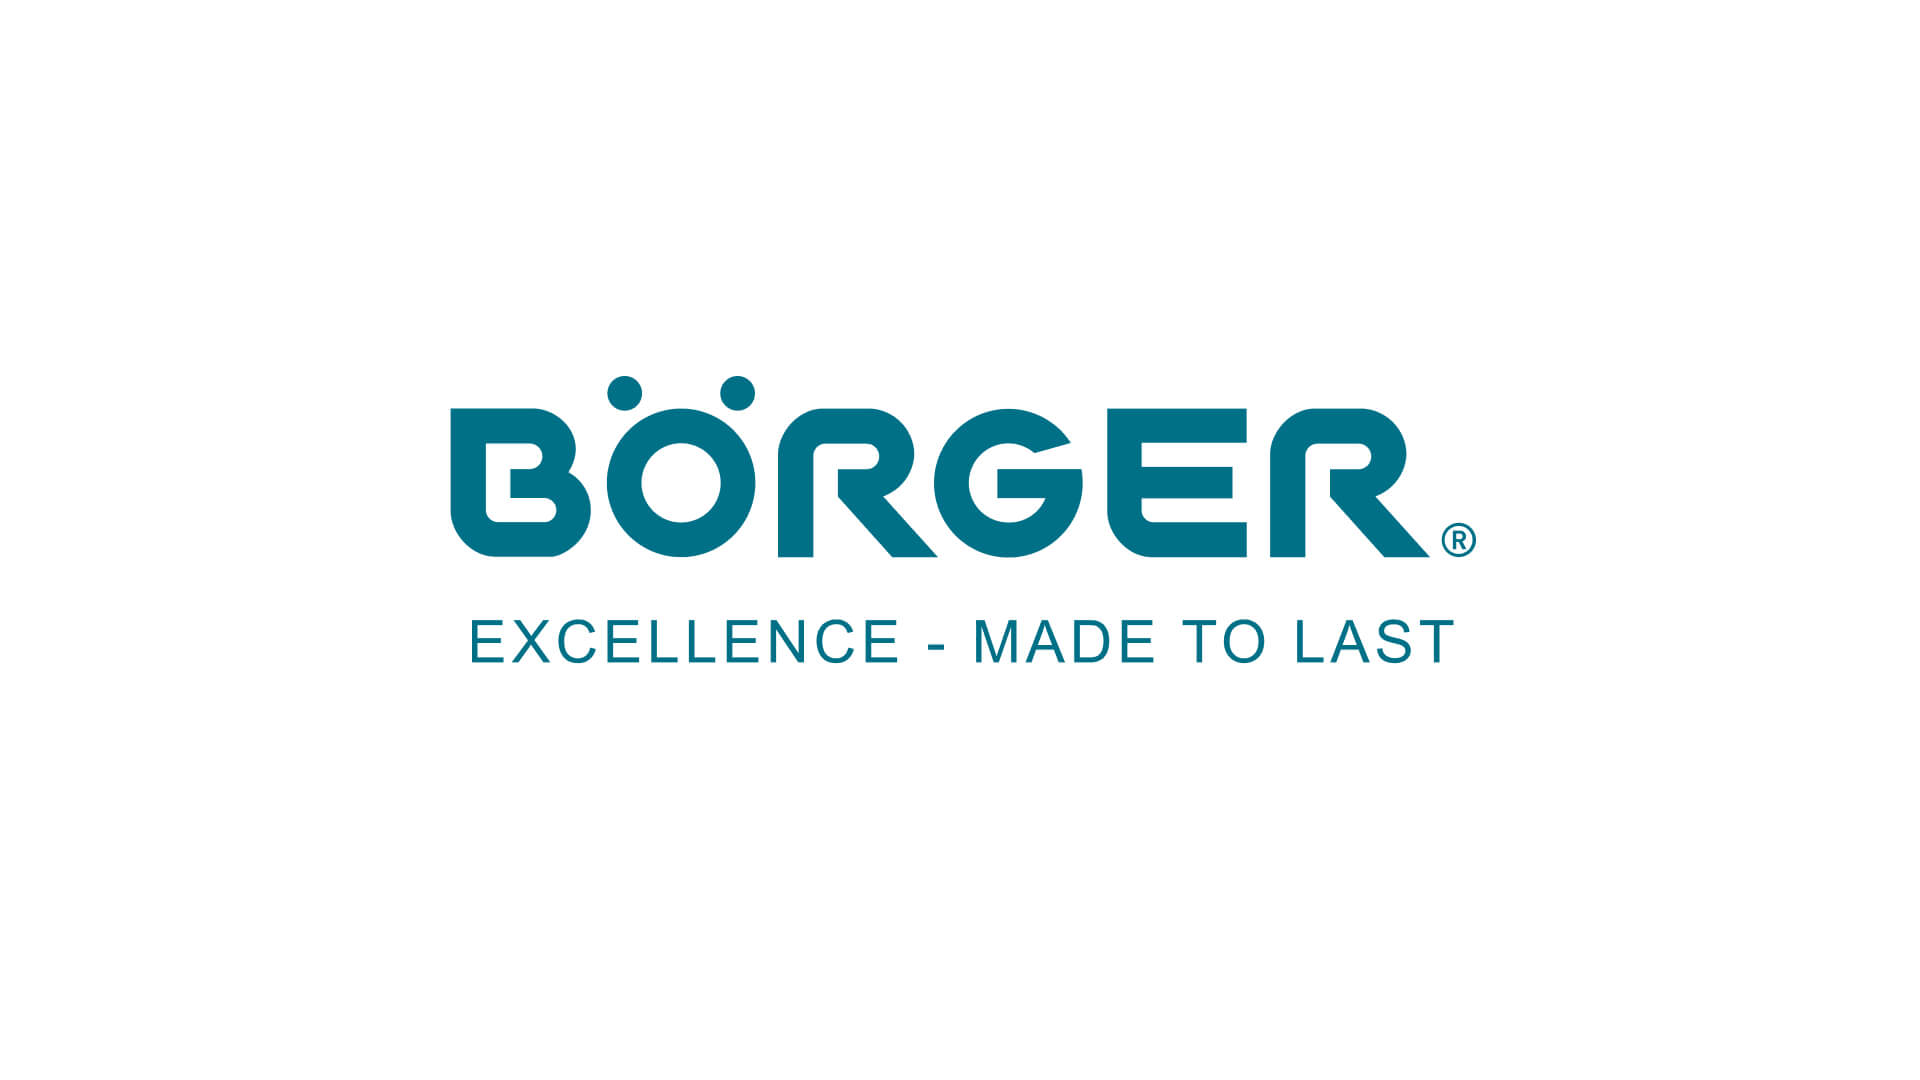 Boerger logo in color